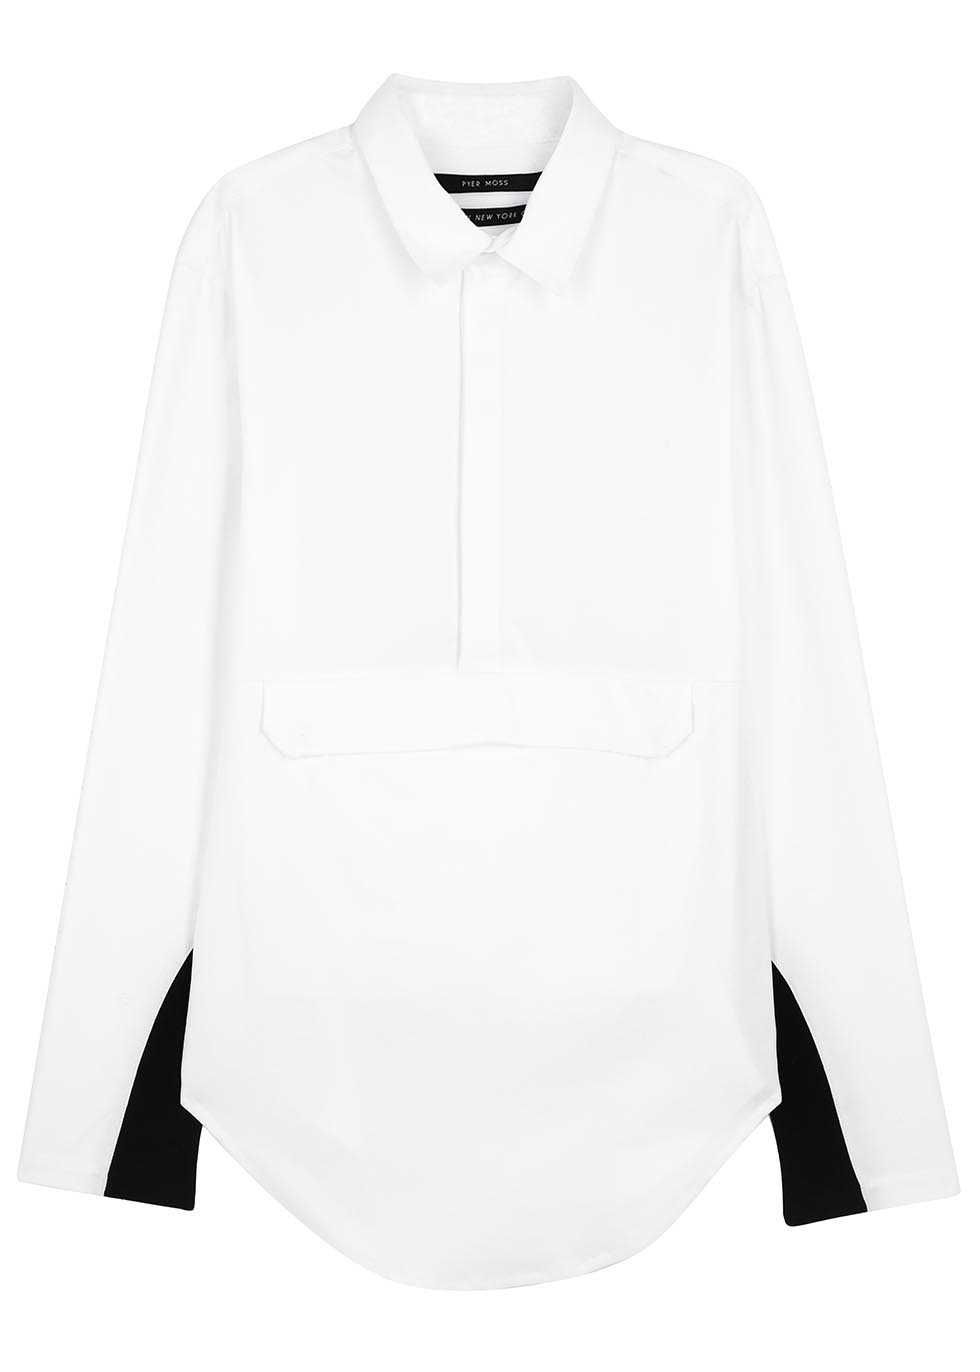 Odyssey white and black shirt